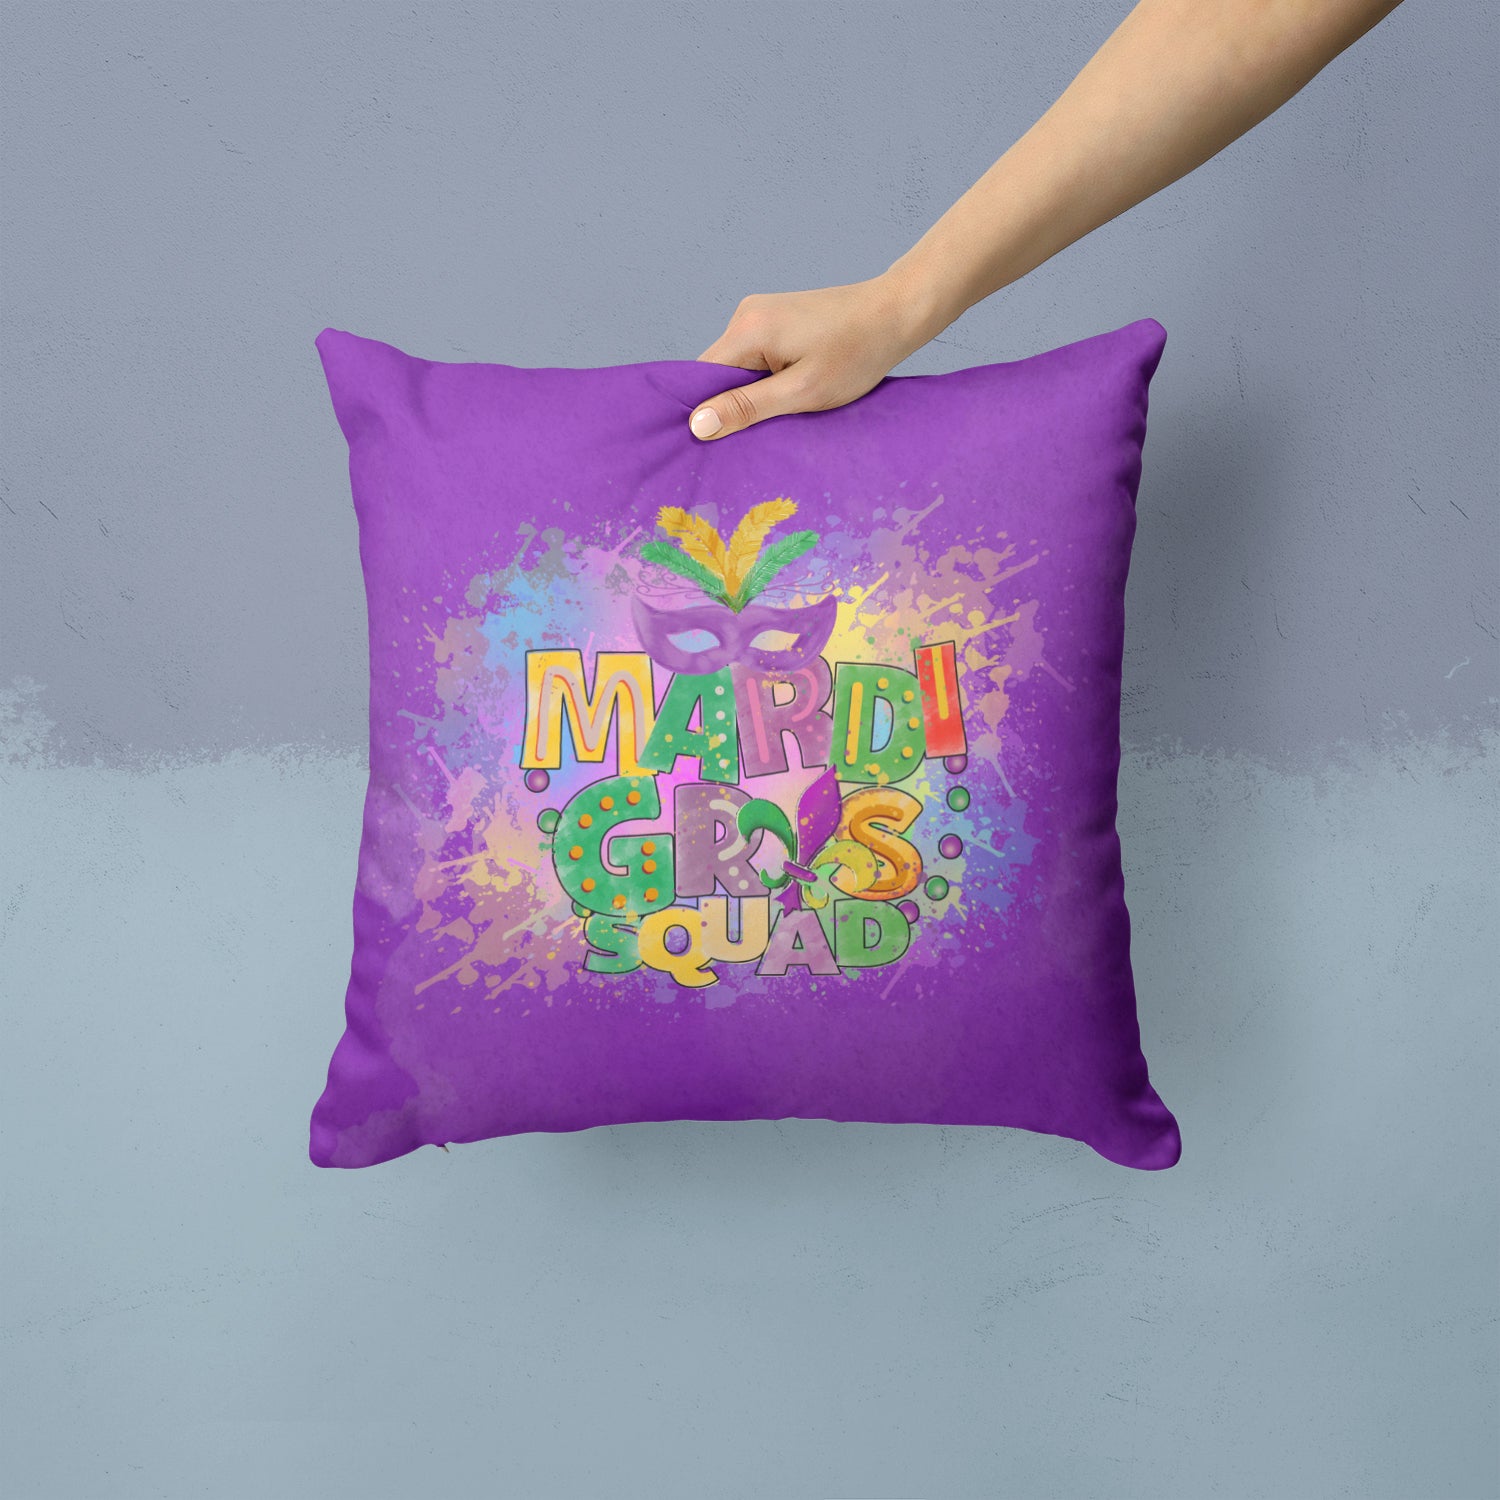 Buy this Mardi Gras Squad Fabric Decorative Pillow